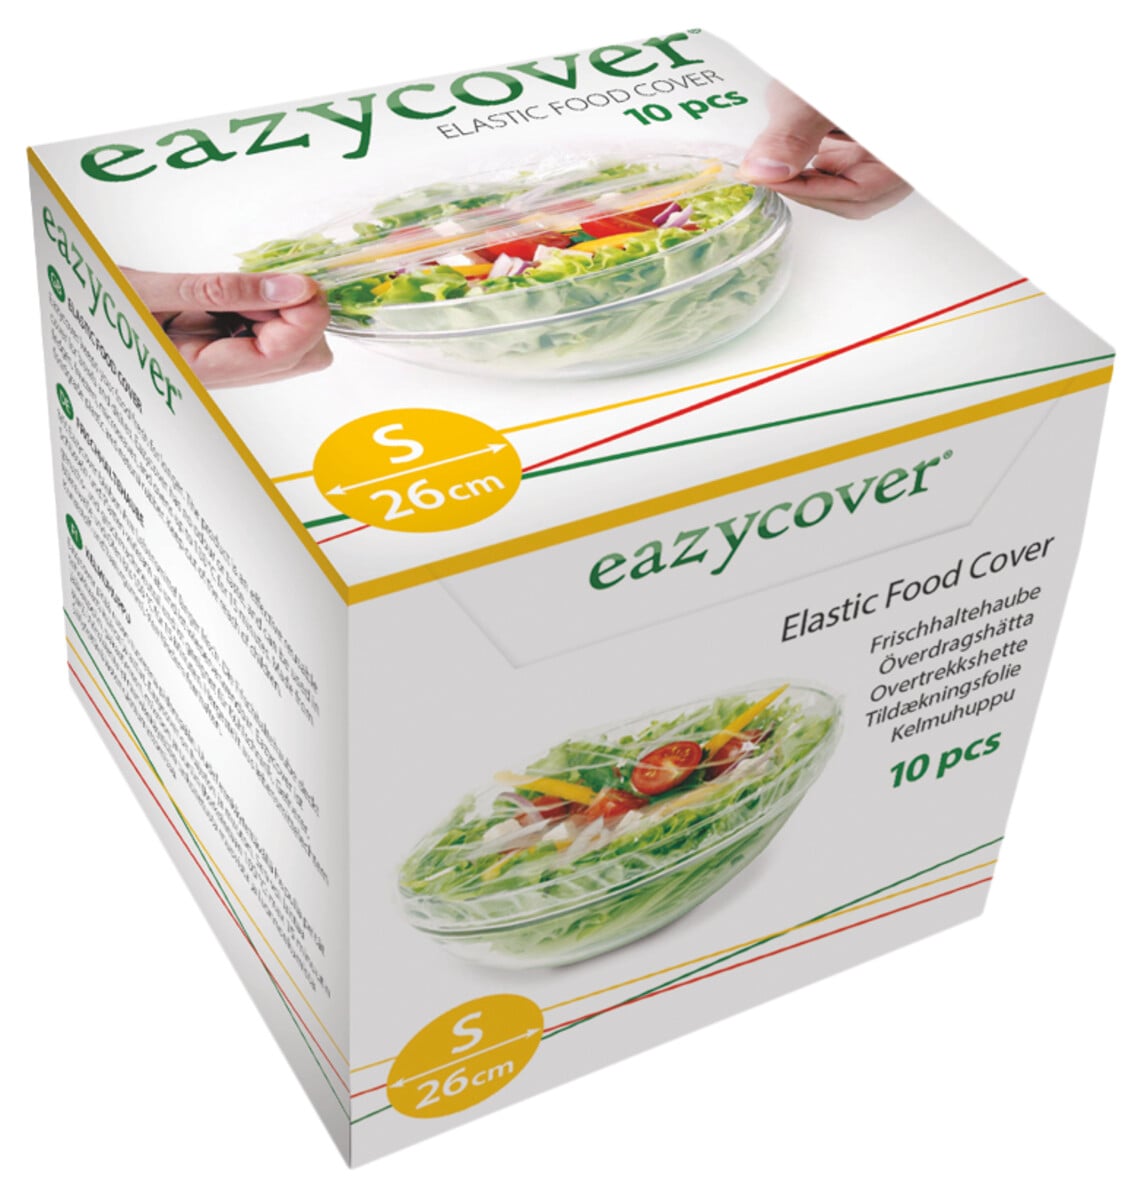 Överdragshätta med elastiskt band Eazycover, 5-pack eller 10-pack